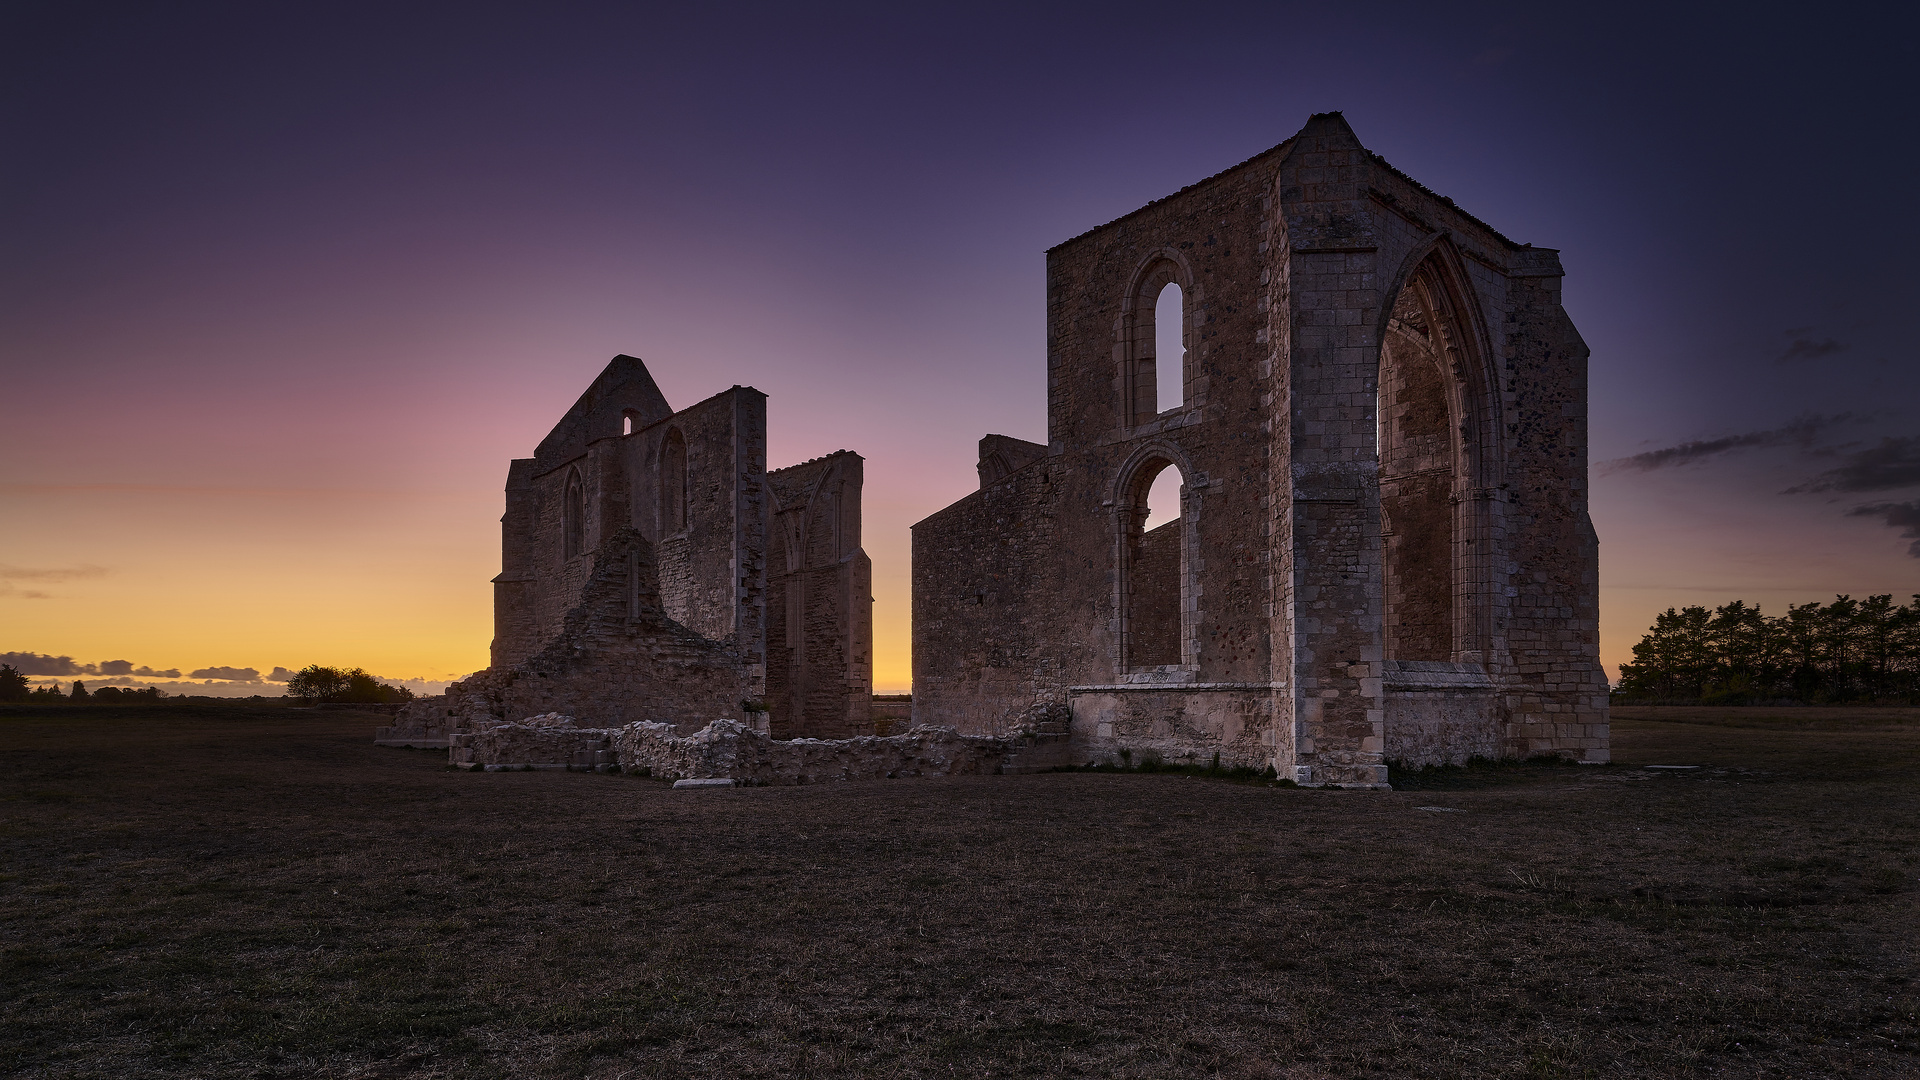 Chapels and churches - Ancient culture's decline